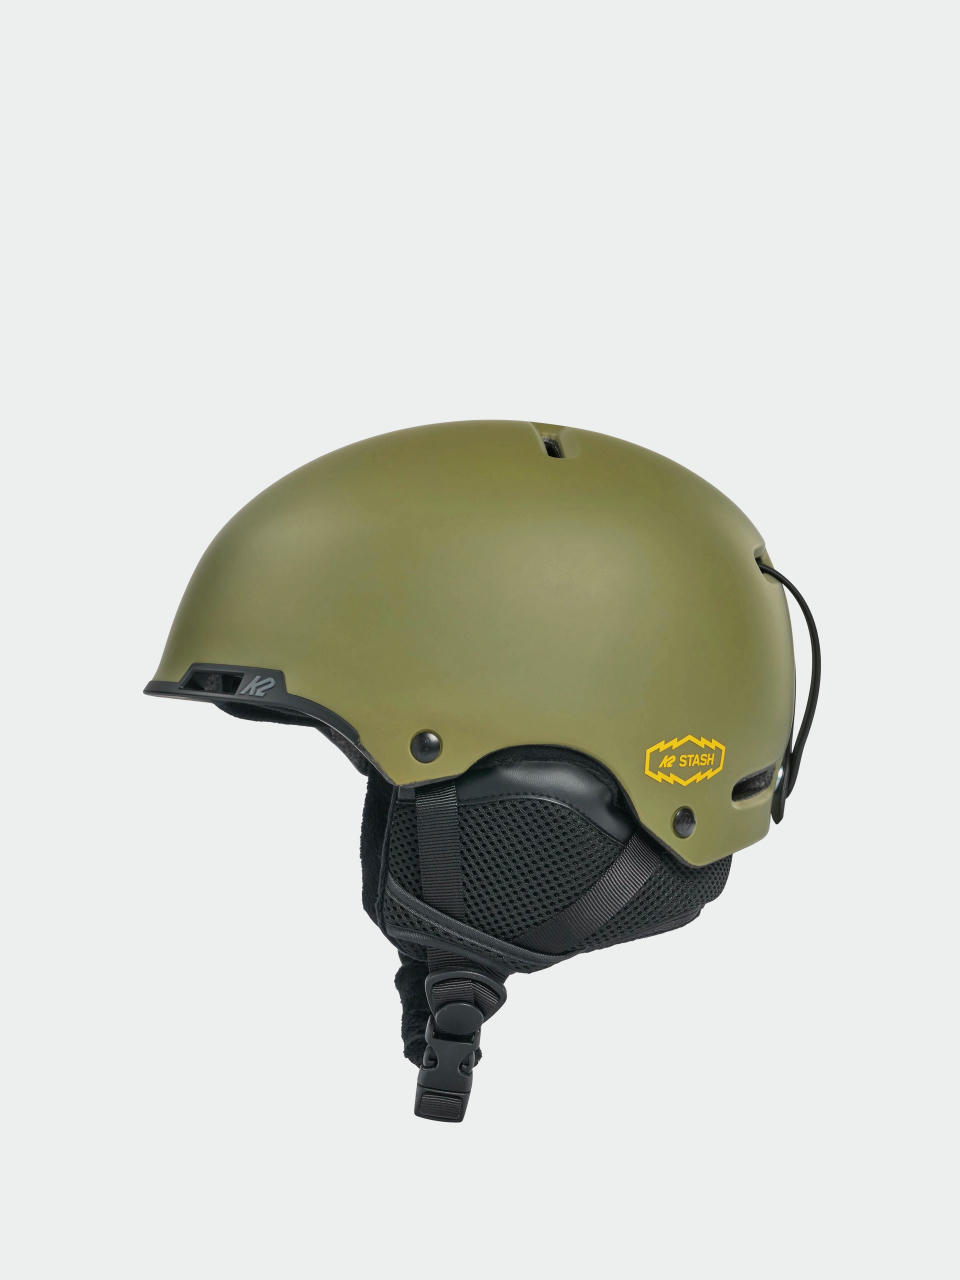 K2 Stash Helmet (olive drab)